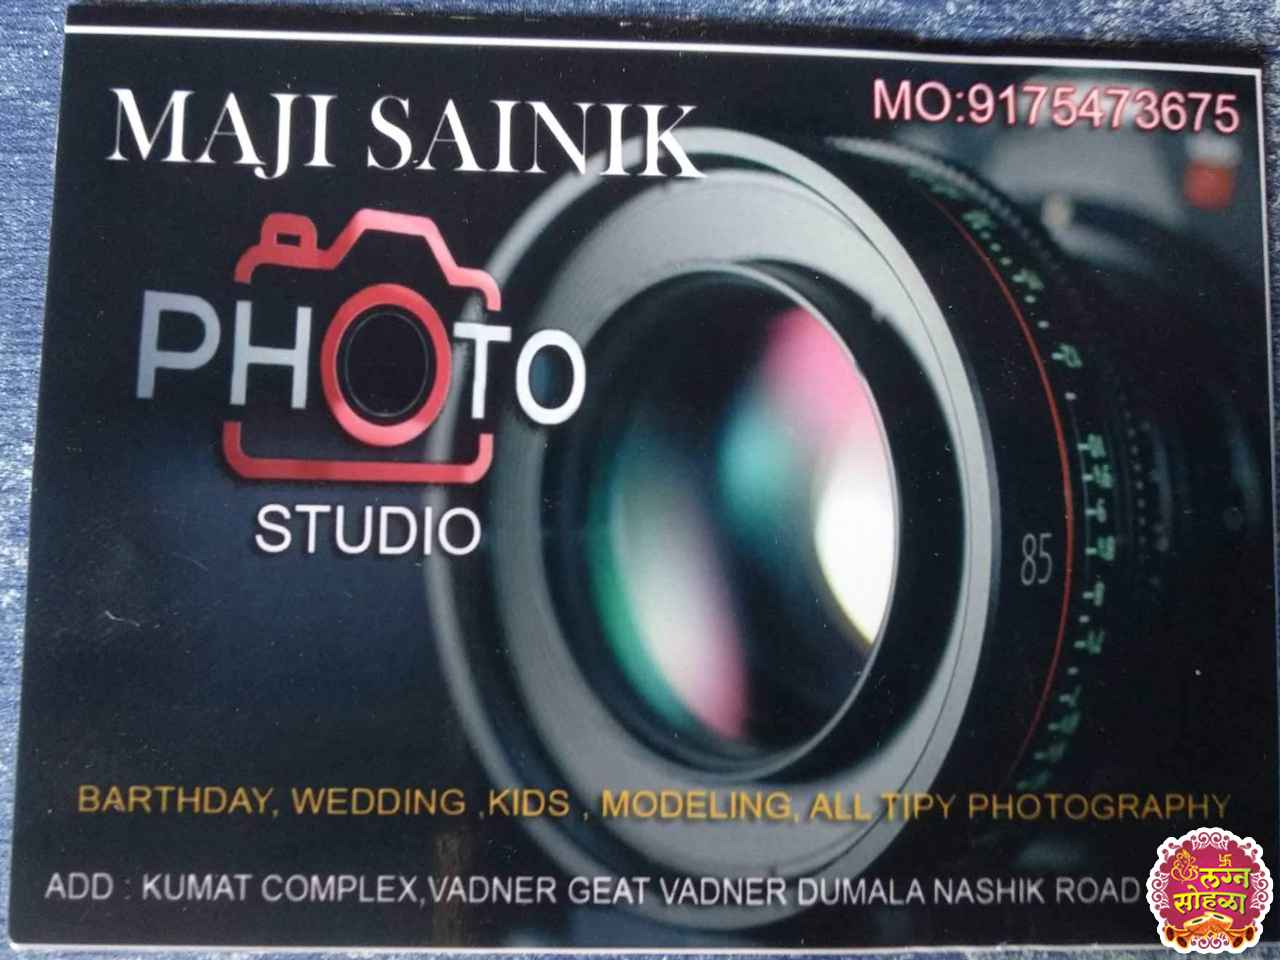 Maji Sainik Photo Studio